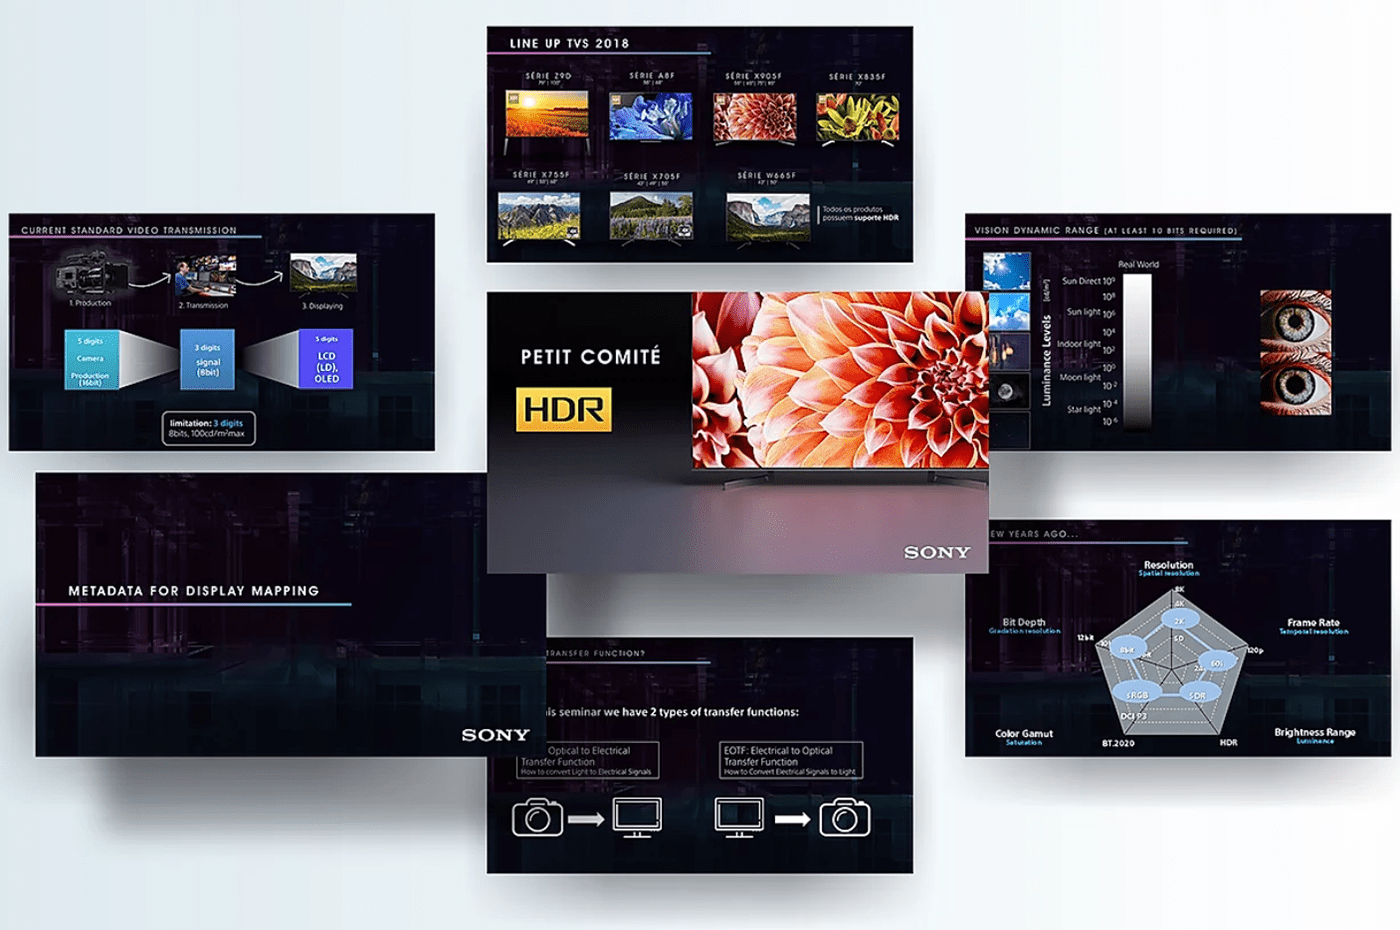 Image may contain: wall, computer and television